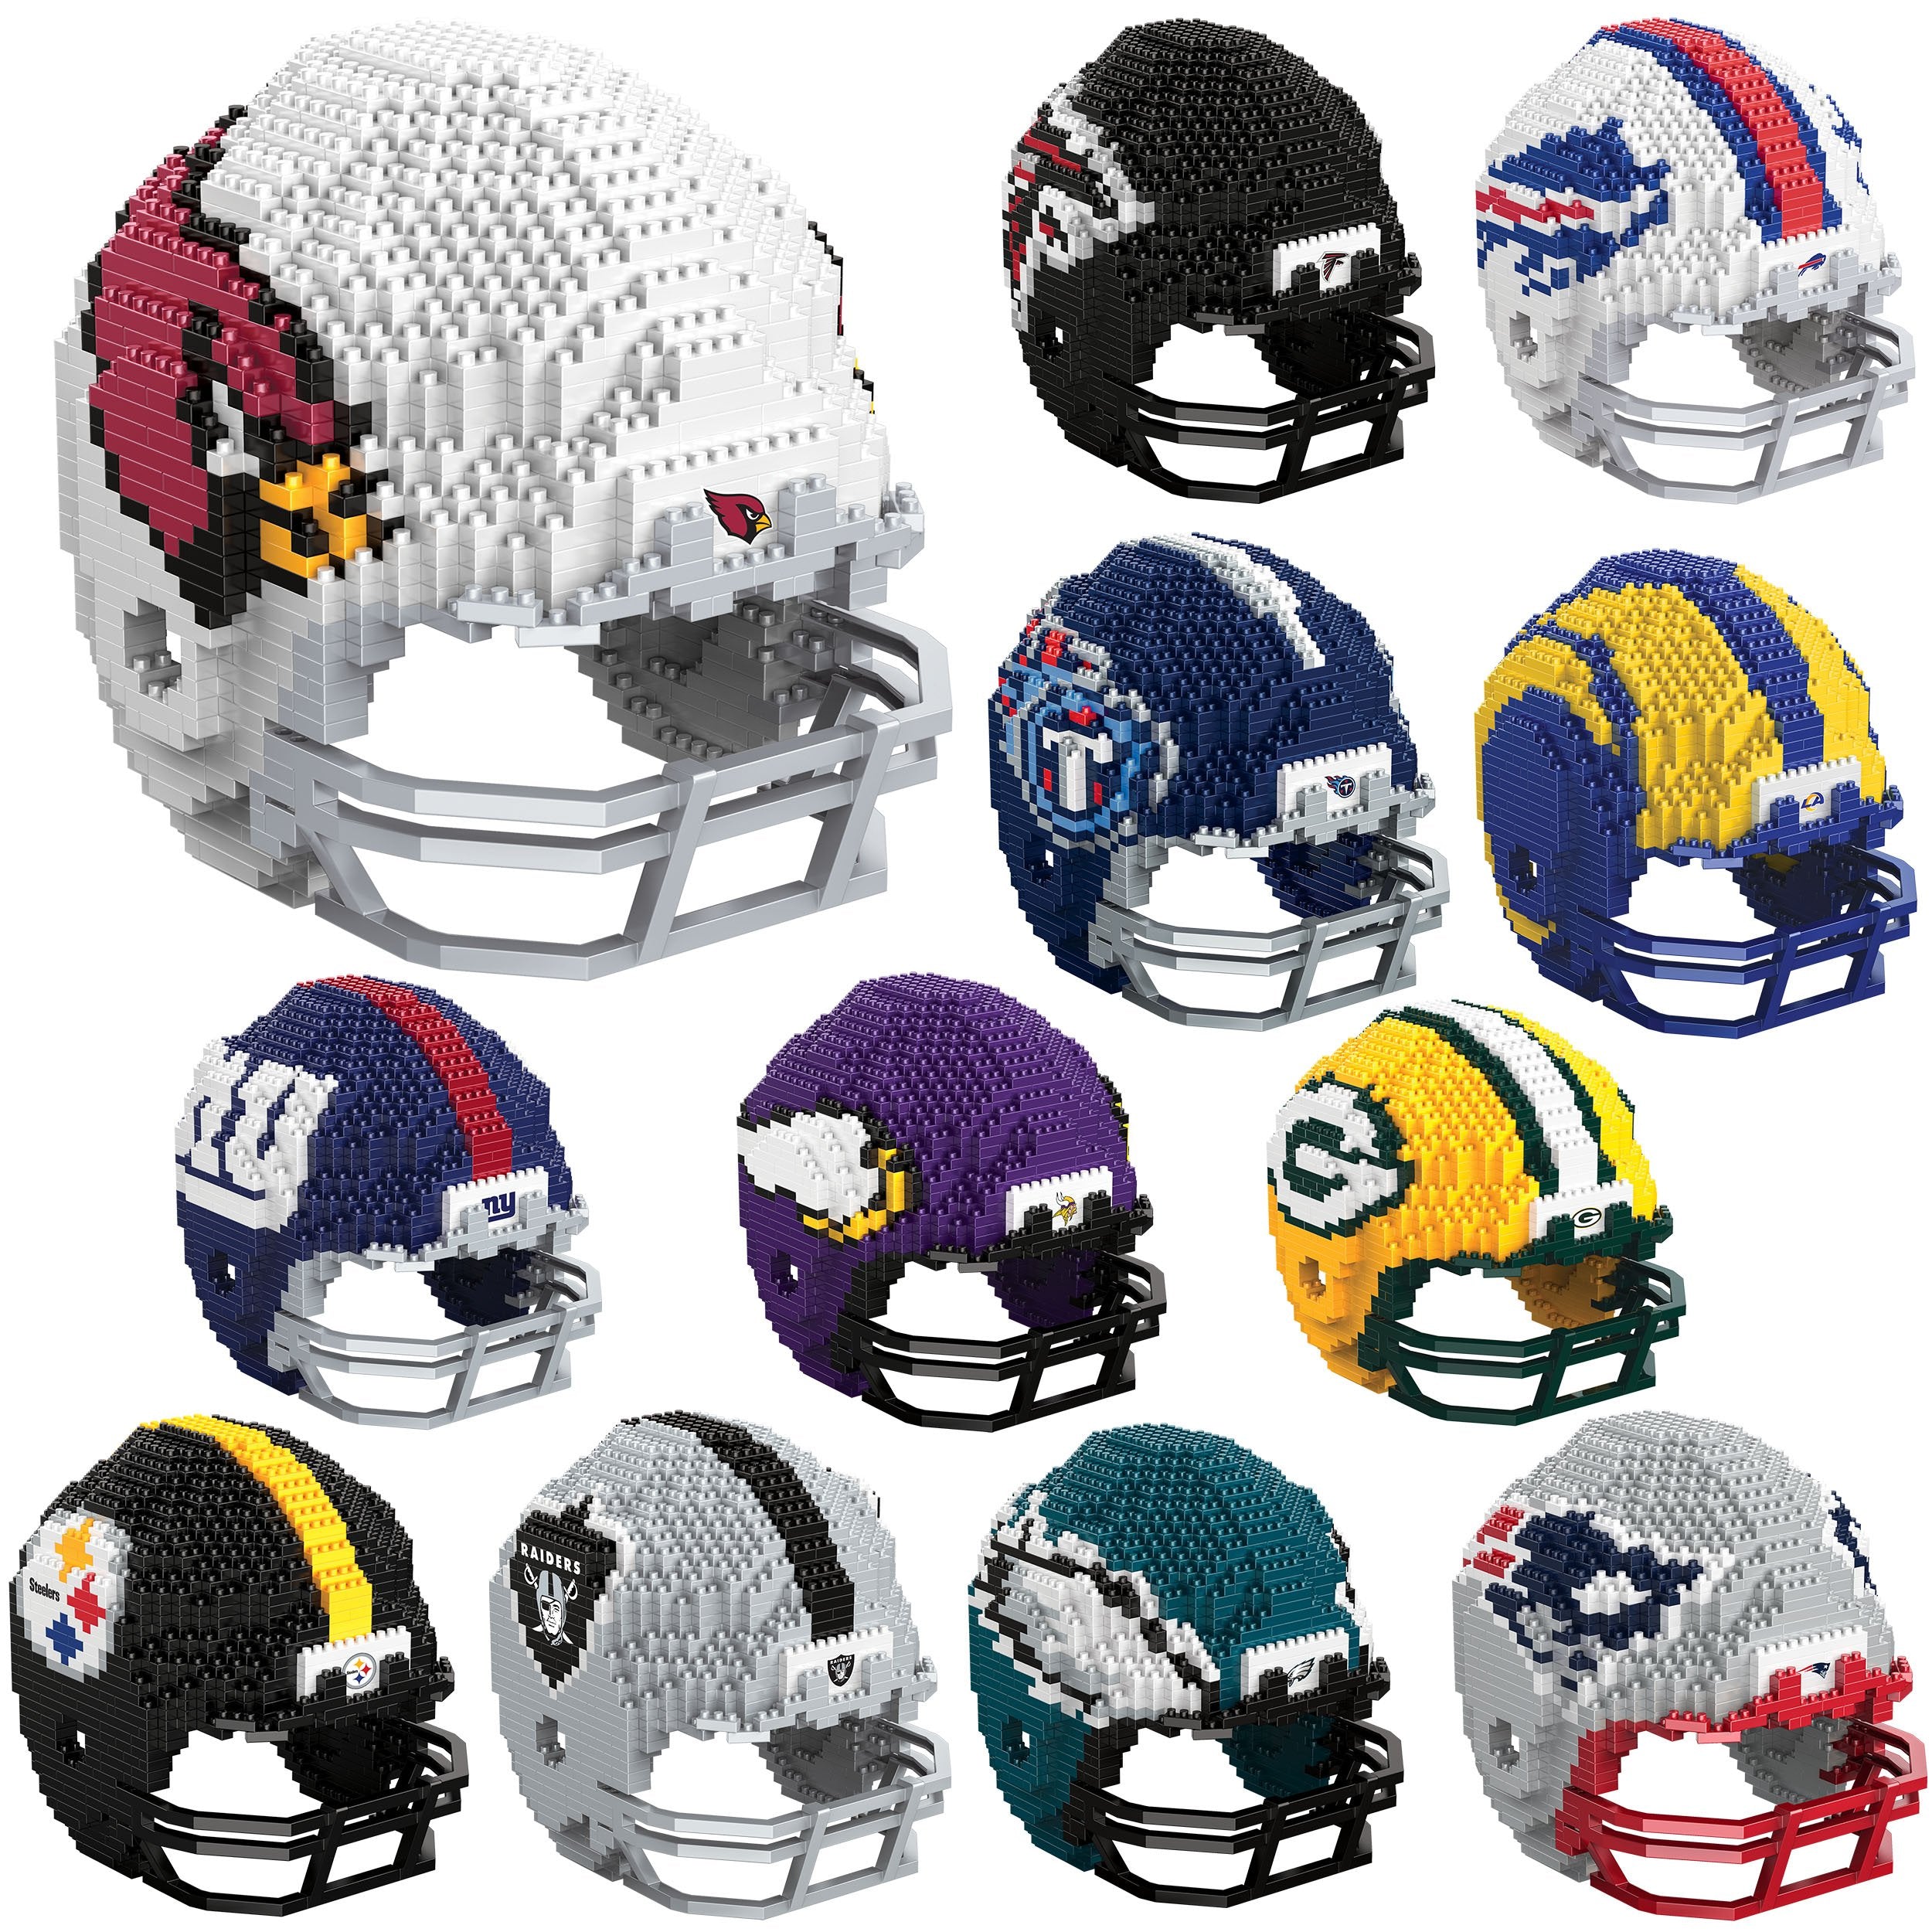 small plastic nfl helmets